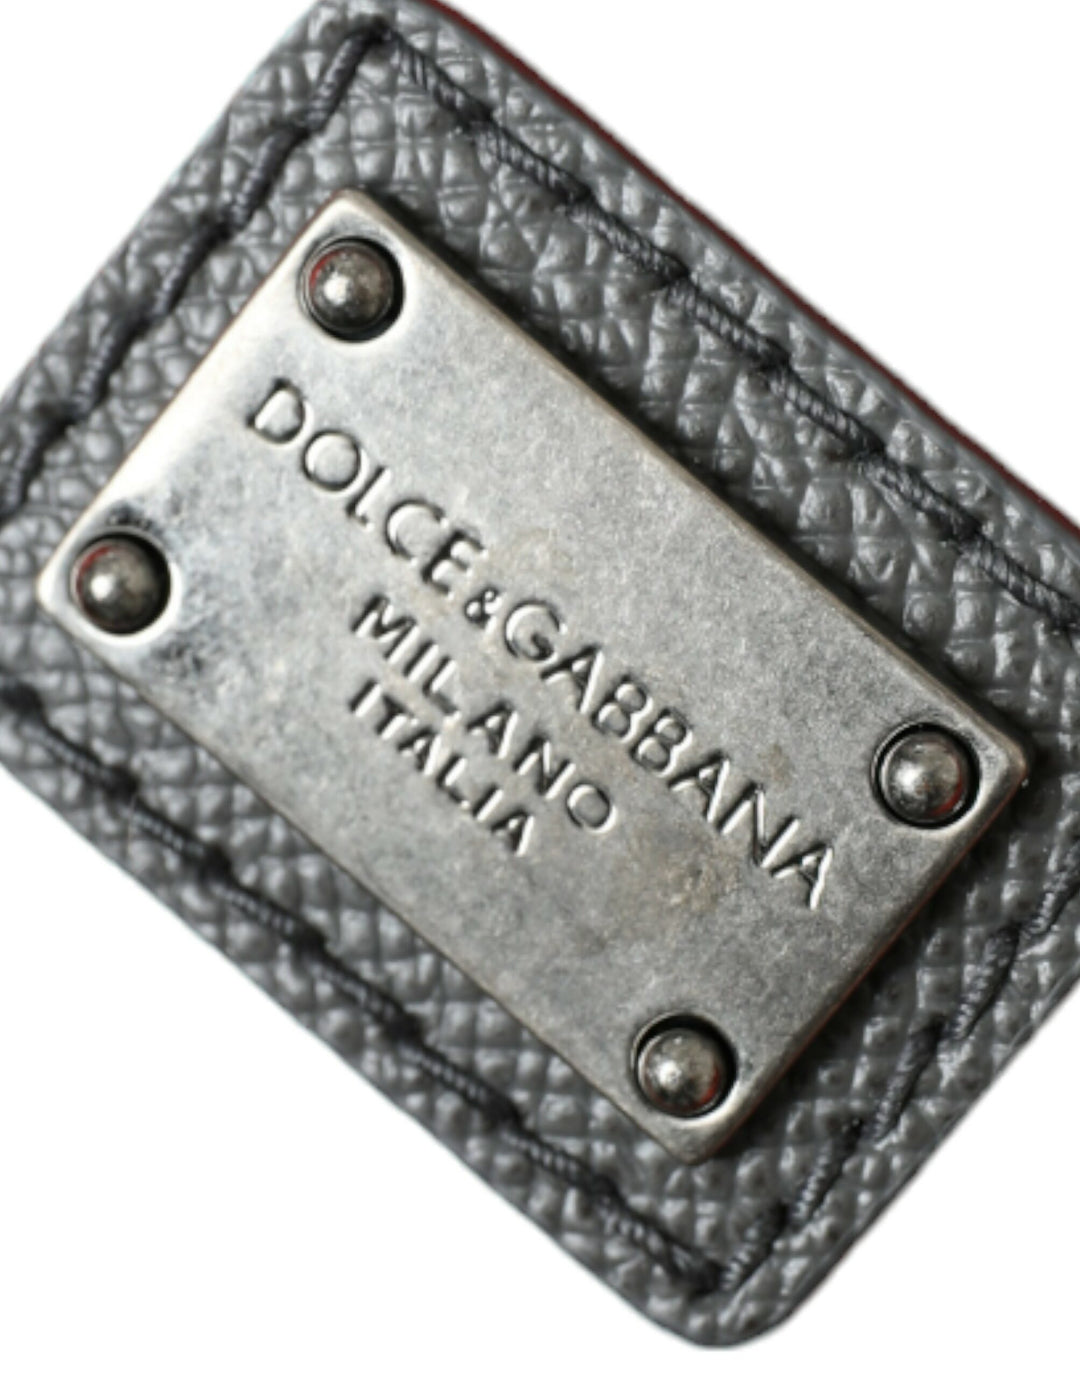 Dolce & Gabbana Elegant Red Nylon-Leather Backpack